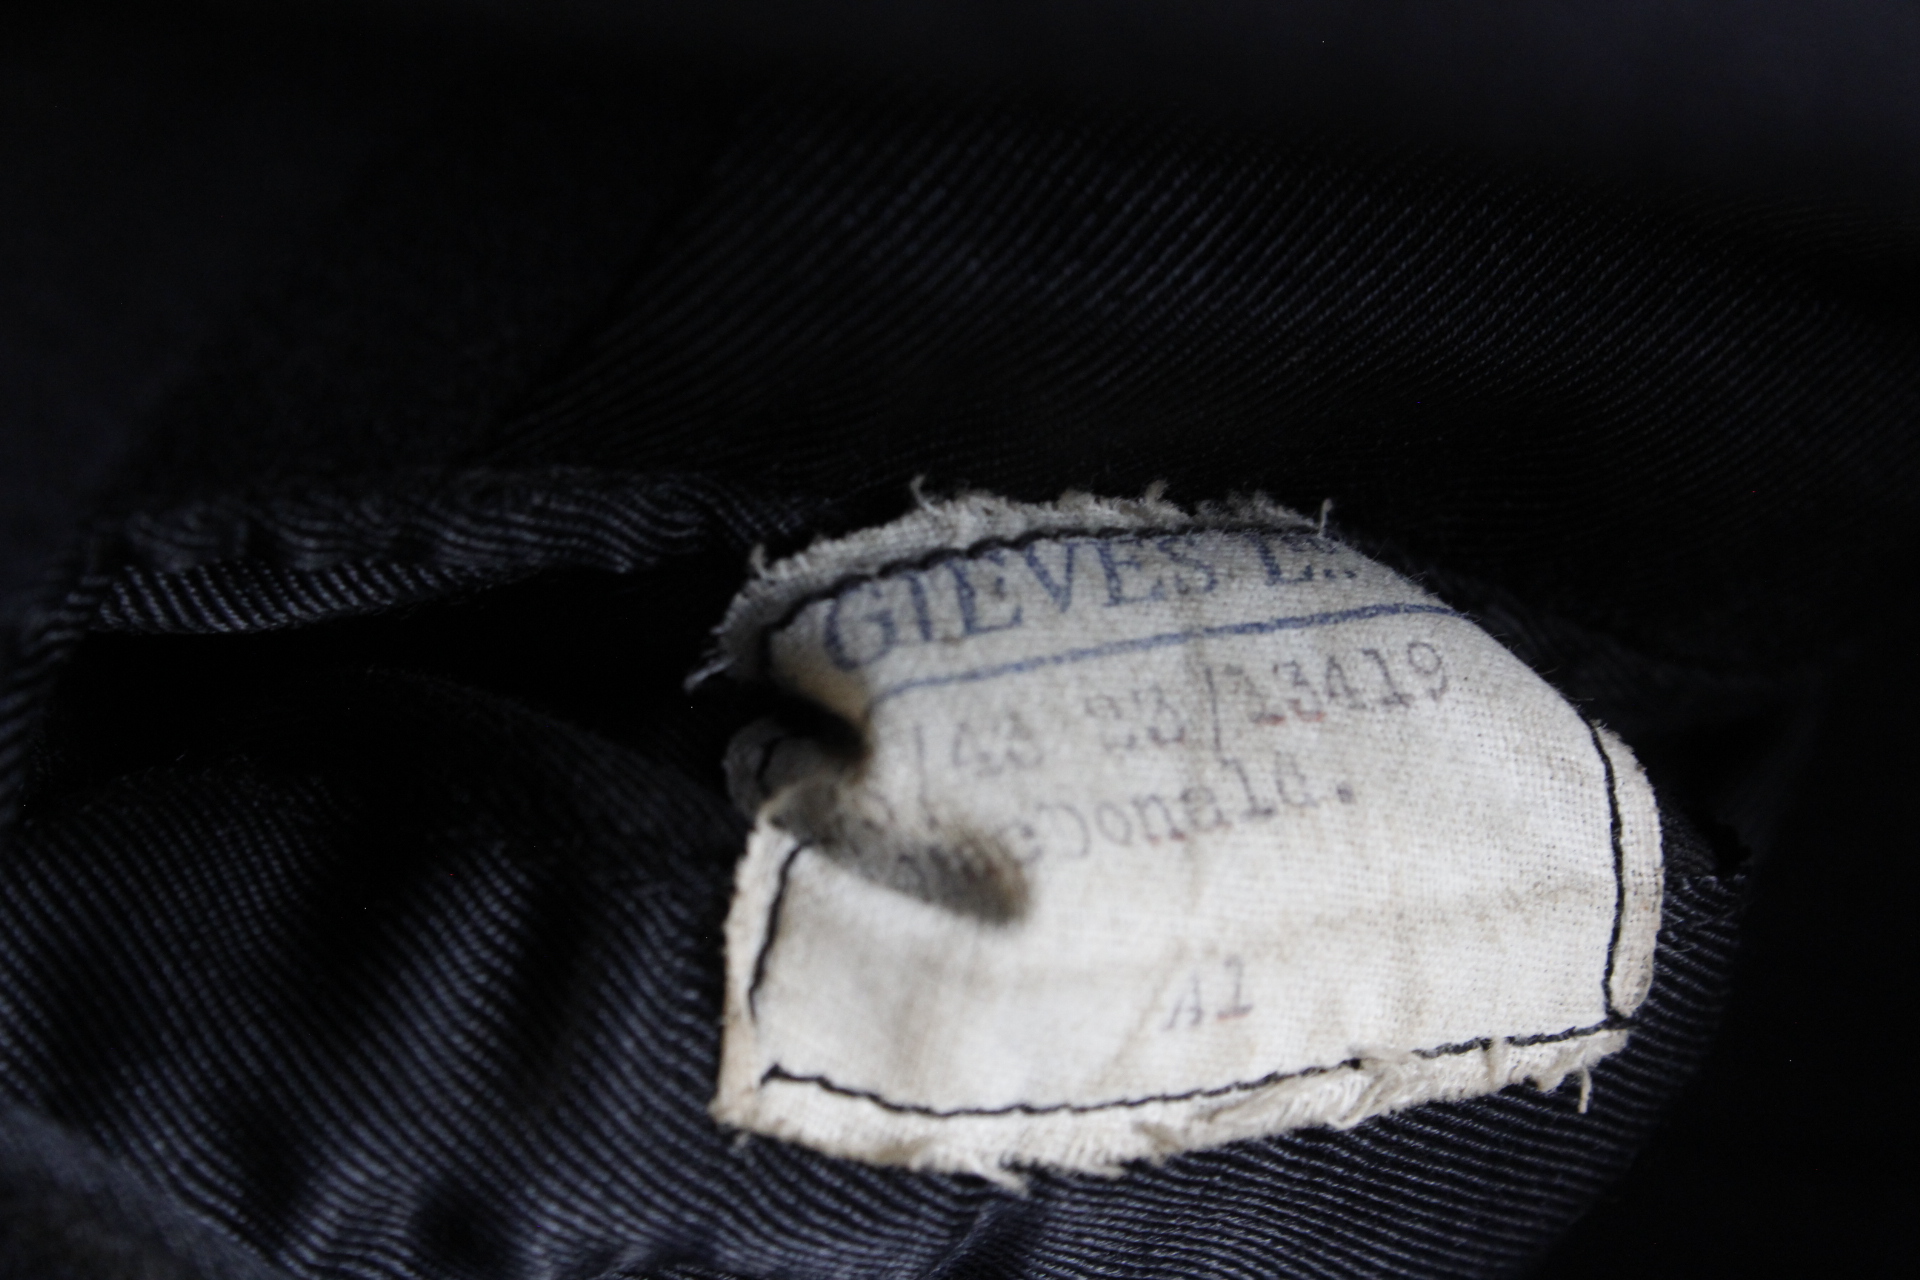 British Royal Navy dress uniform jacket having Gieves Ltd label "L/5/43 23/13419 D Macdonald A1", - Image 5 of 5